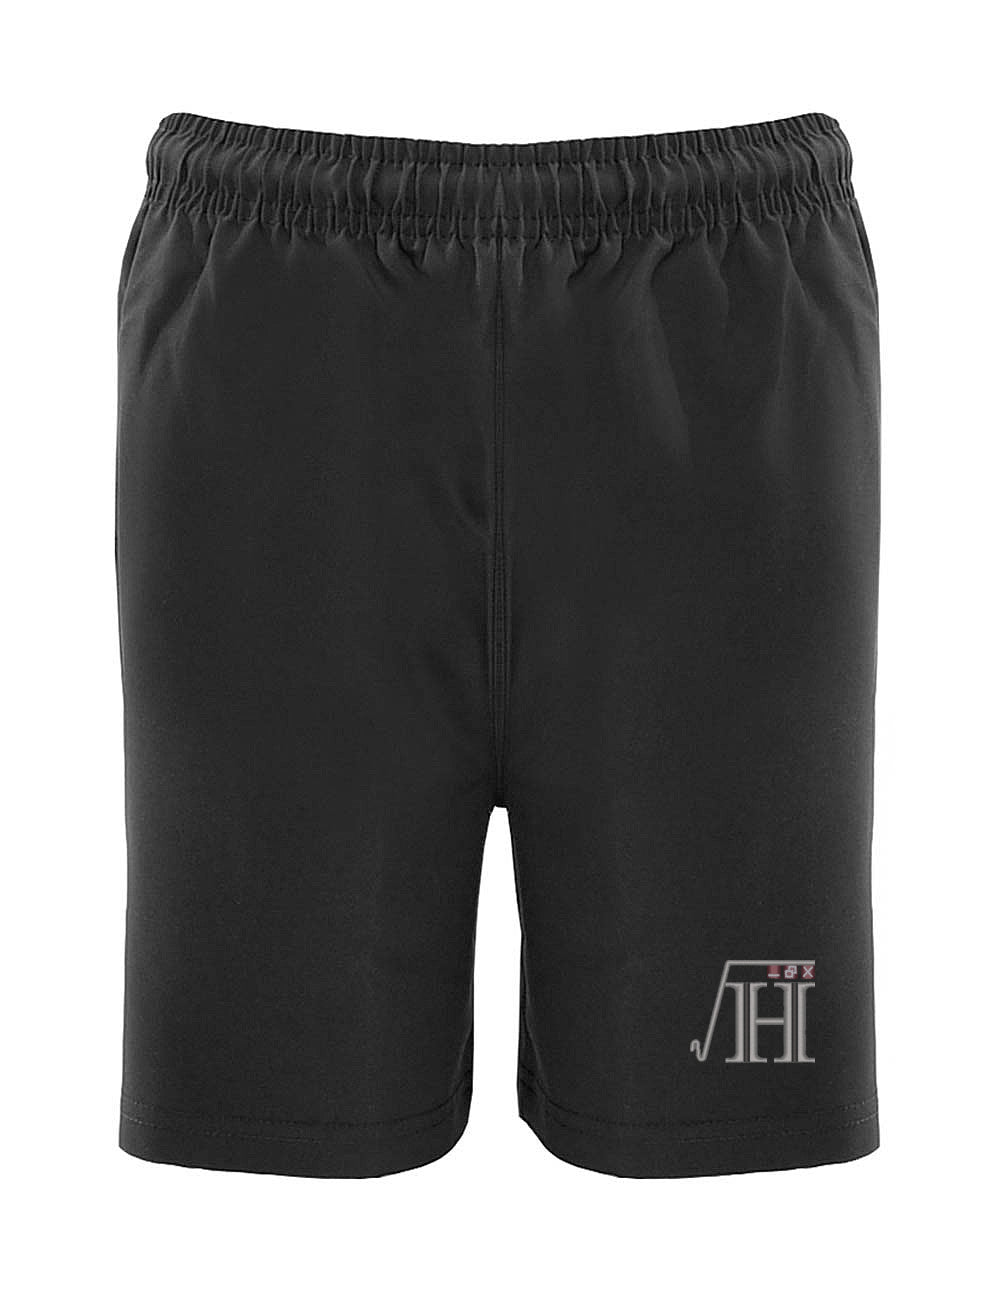 Hurworth Black And Silver Sport Shorts